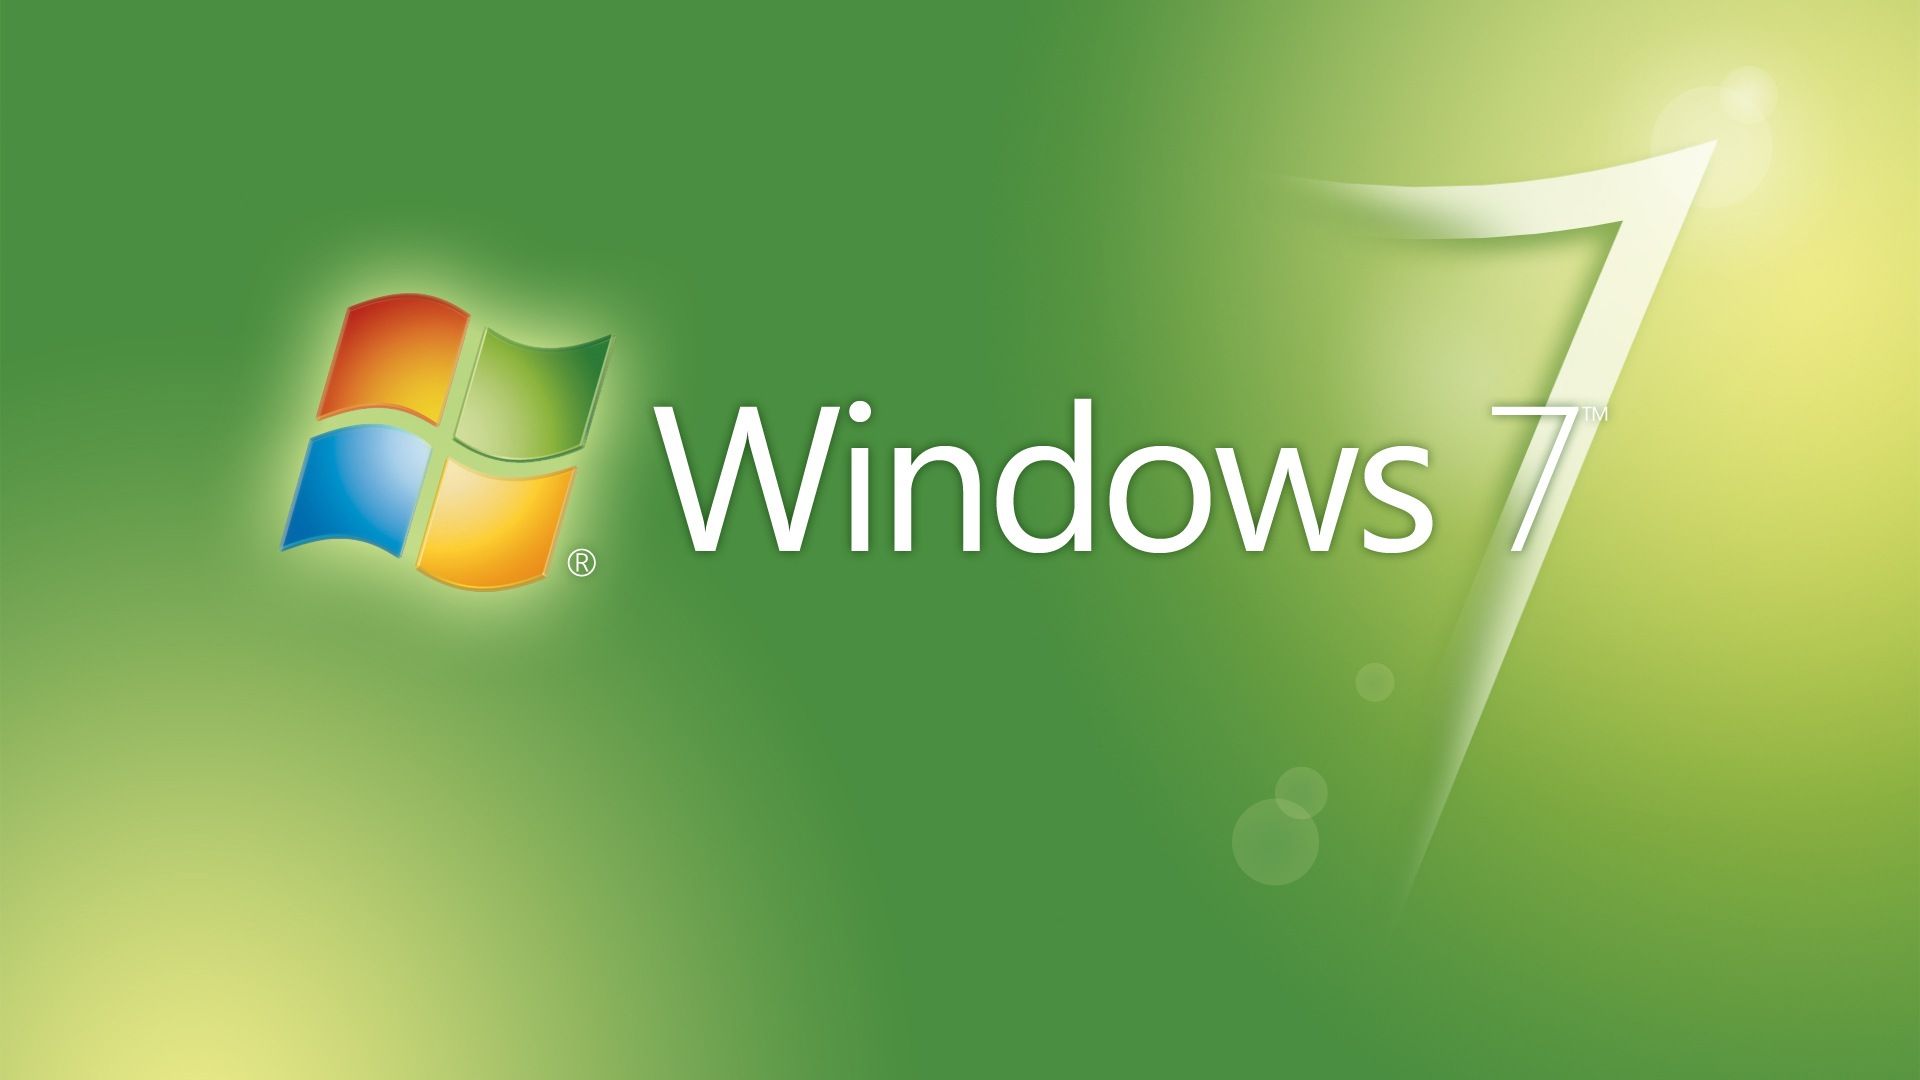 Windows 7 Wallpaper Free Download 138839